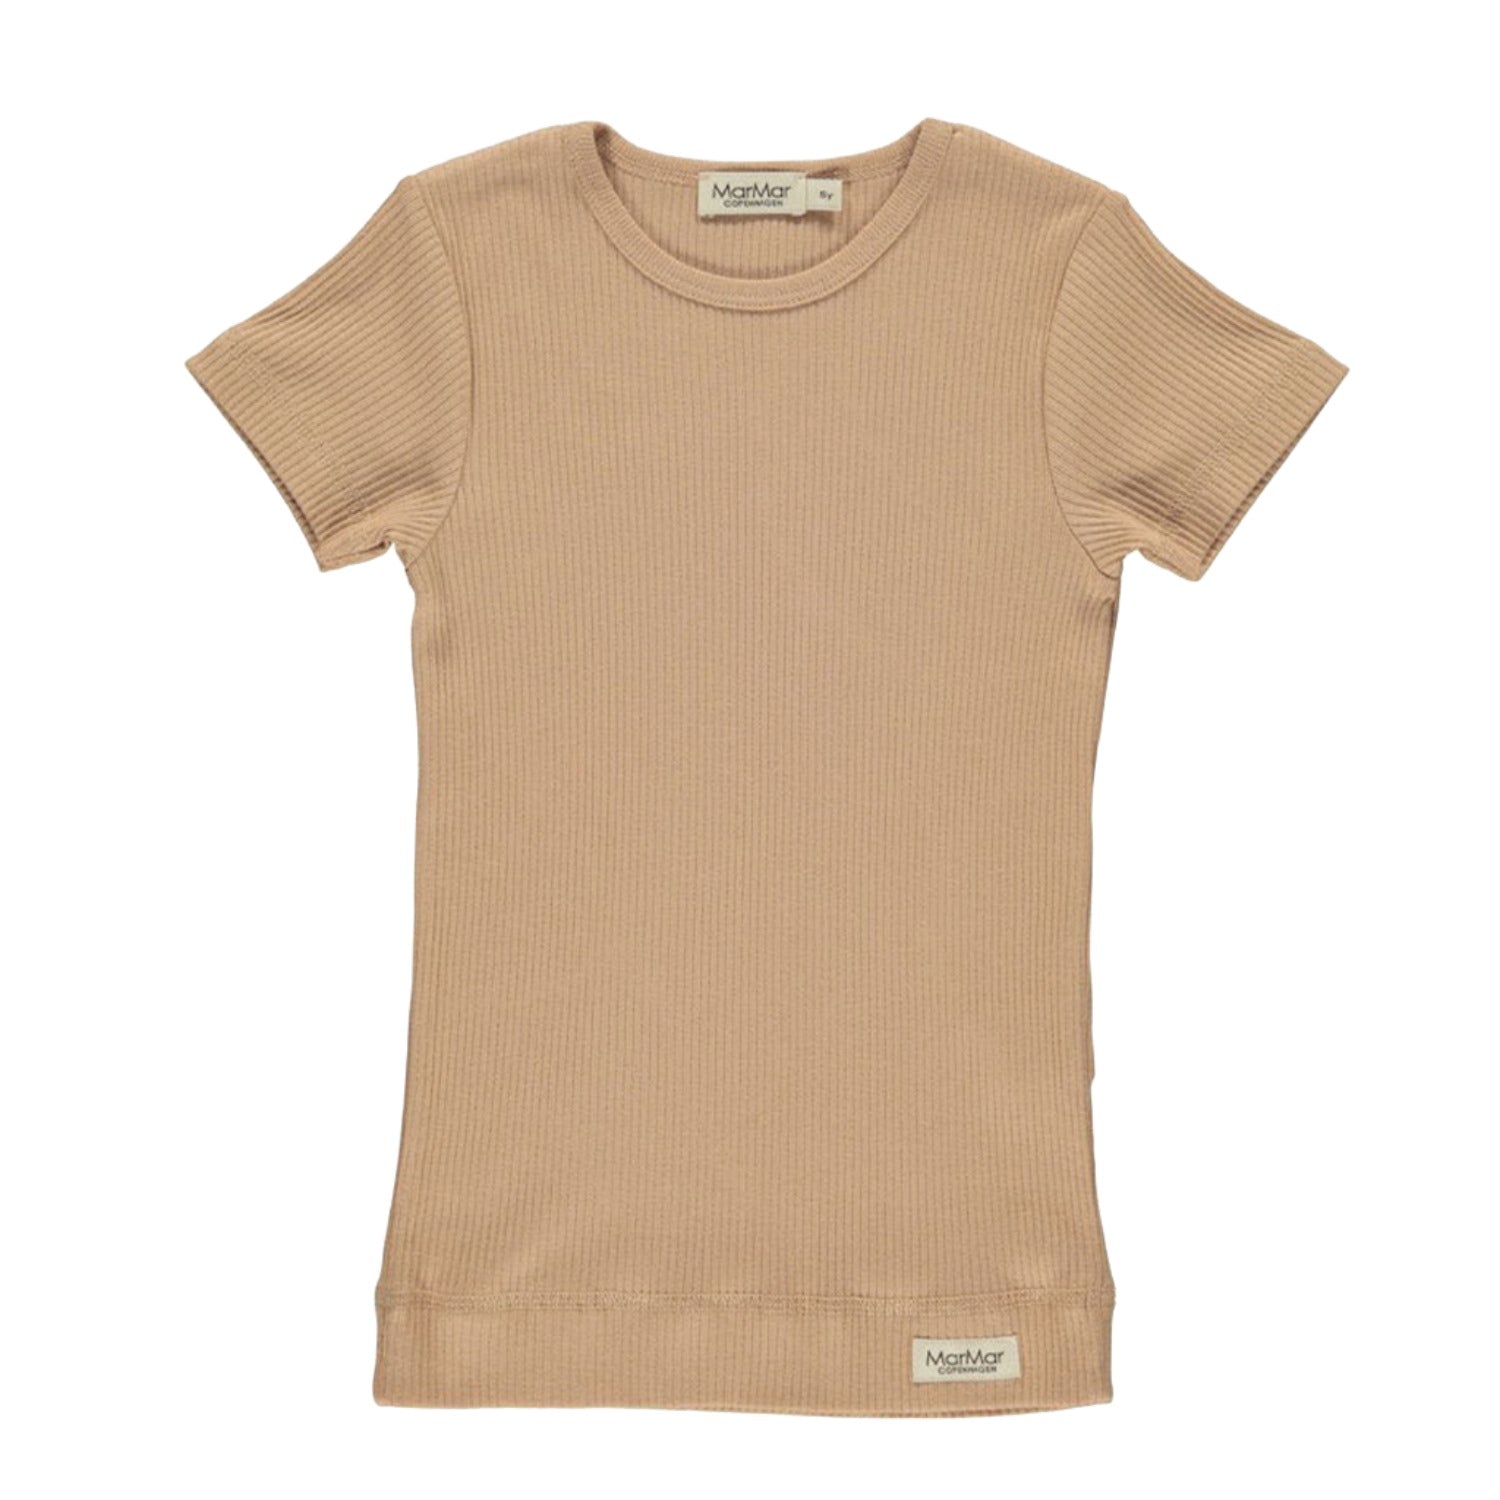 An image of Kids Short Sleeve T-shirt - Kids Top - Plain Tee Shirt| MarMar Copenhagen 1Y/80C...